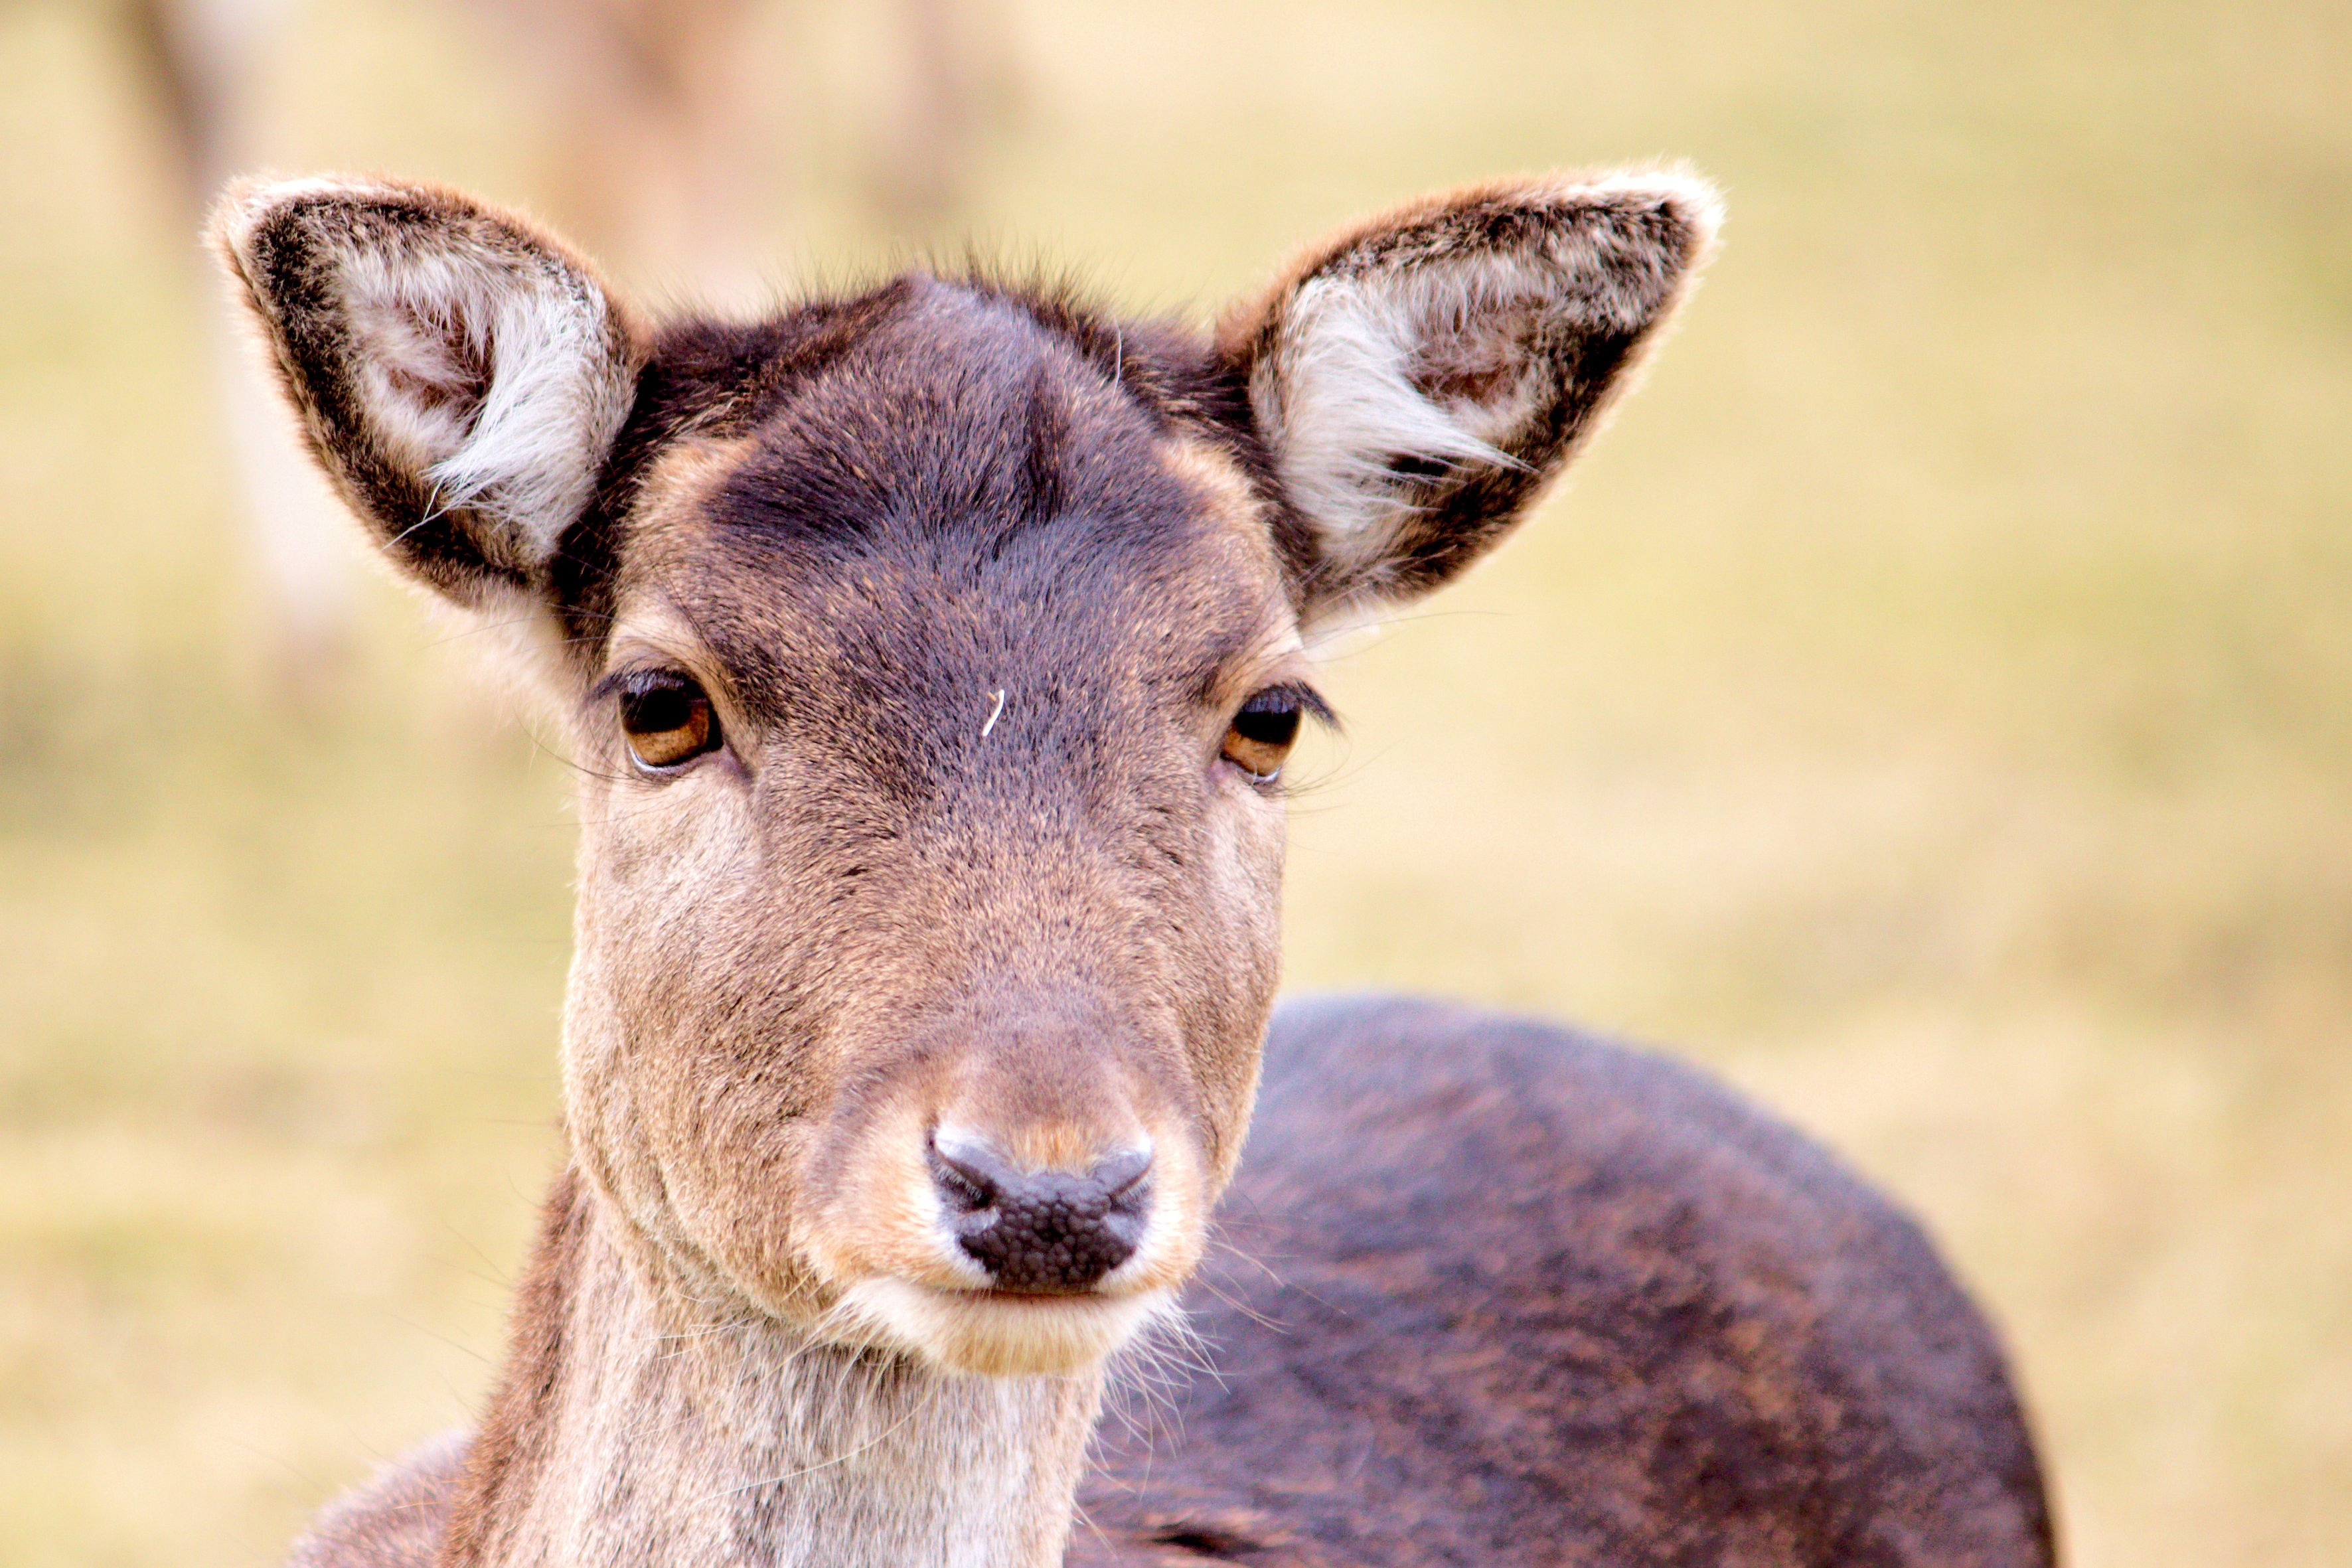 shallow focus photograph of a brown deer